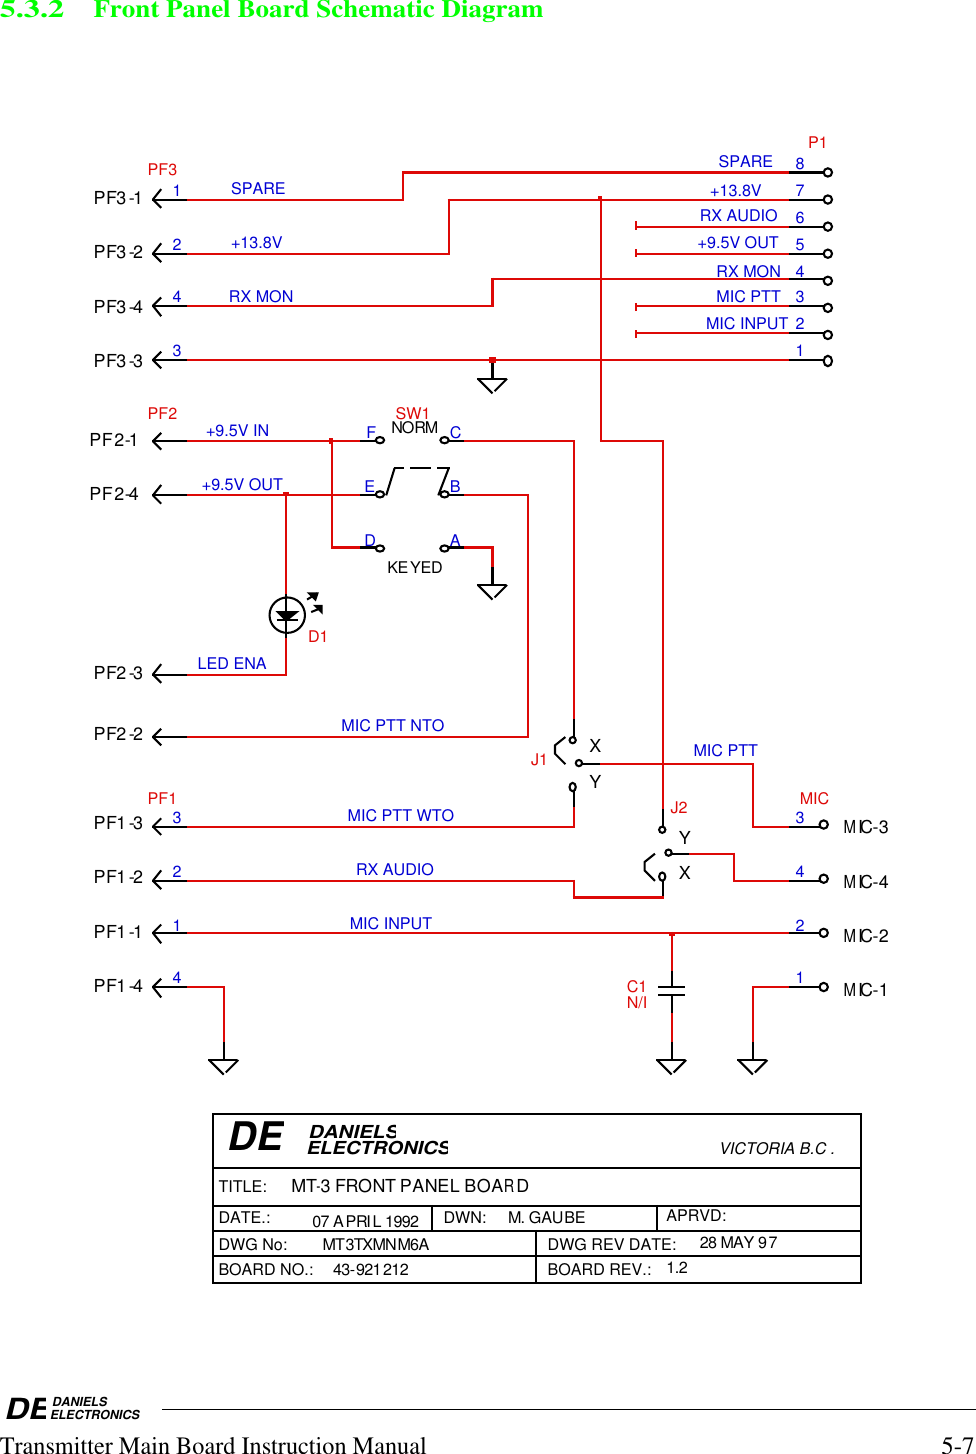 DEDANIELSELECTRONICSTransmitter Main Board Instruction Manual5-75.3.2Front Panel Board Schematic DiagramVICTORIA B.C .DATE.:DWN:DWG No:TITLE:APRVD:BOARD NO.:BOARD REV.:DWG REV DATE:DEDANIELS ELECTRONICS NORMKEYEDYMIC-1MIC-3MIC-4MIC-2PF2-1PF2-4PF2-3PF2-2PF1-3PF1-2PF1-1PF1-4XM. GAUBEMT-3 FRONT PANEL  BOARD43-921212 1.2PF3-2PF3-1PF3-4PF3-3YX07 APRIL 199228 MAY 97MT3TXMNM6AD1J1N/IC1 1234MIC1234PF1PF24213PF312345678P1J2FEDCBASW1+9.5V INLED ENAMIC PTT NTOMIC PTT WTOMIC INPUTMIC INPUTMIC PTTMIC PTTRX MONRX MON+9.5V OUT+9.5V OUTRX AUDIORX AUDIO+13.8V+13.8VSPARESPARE